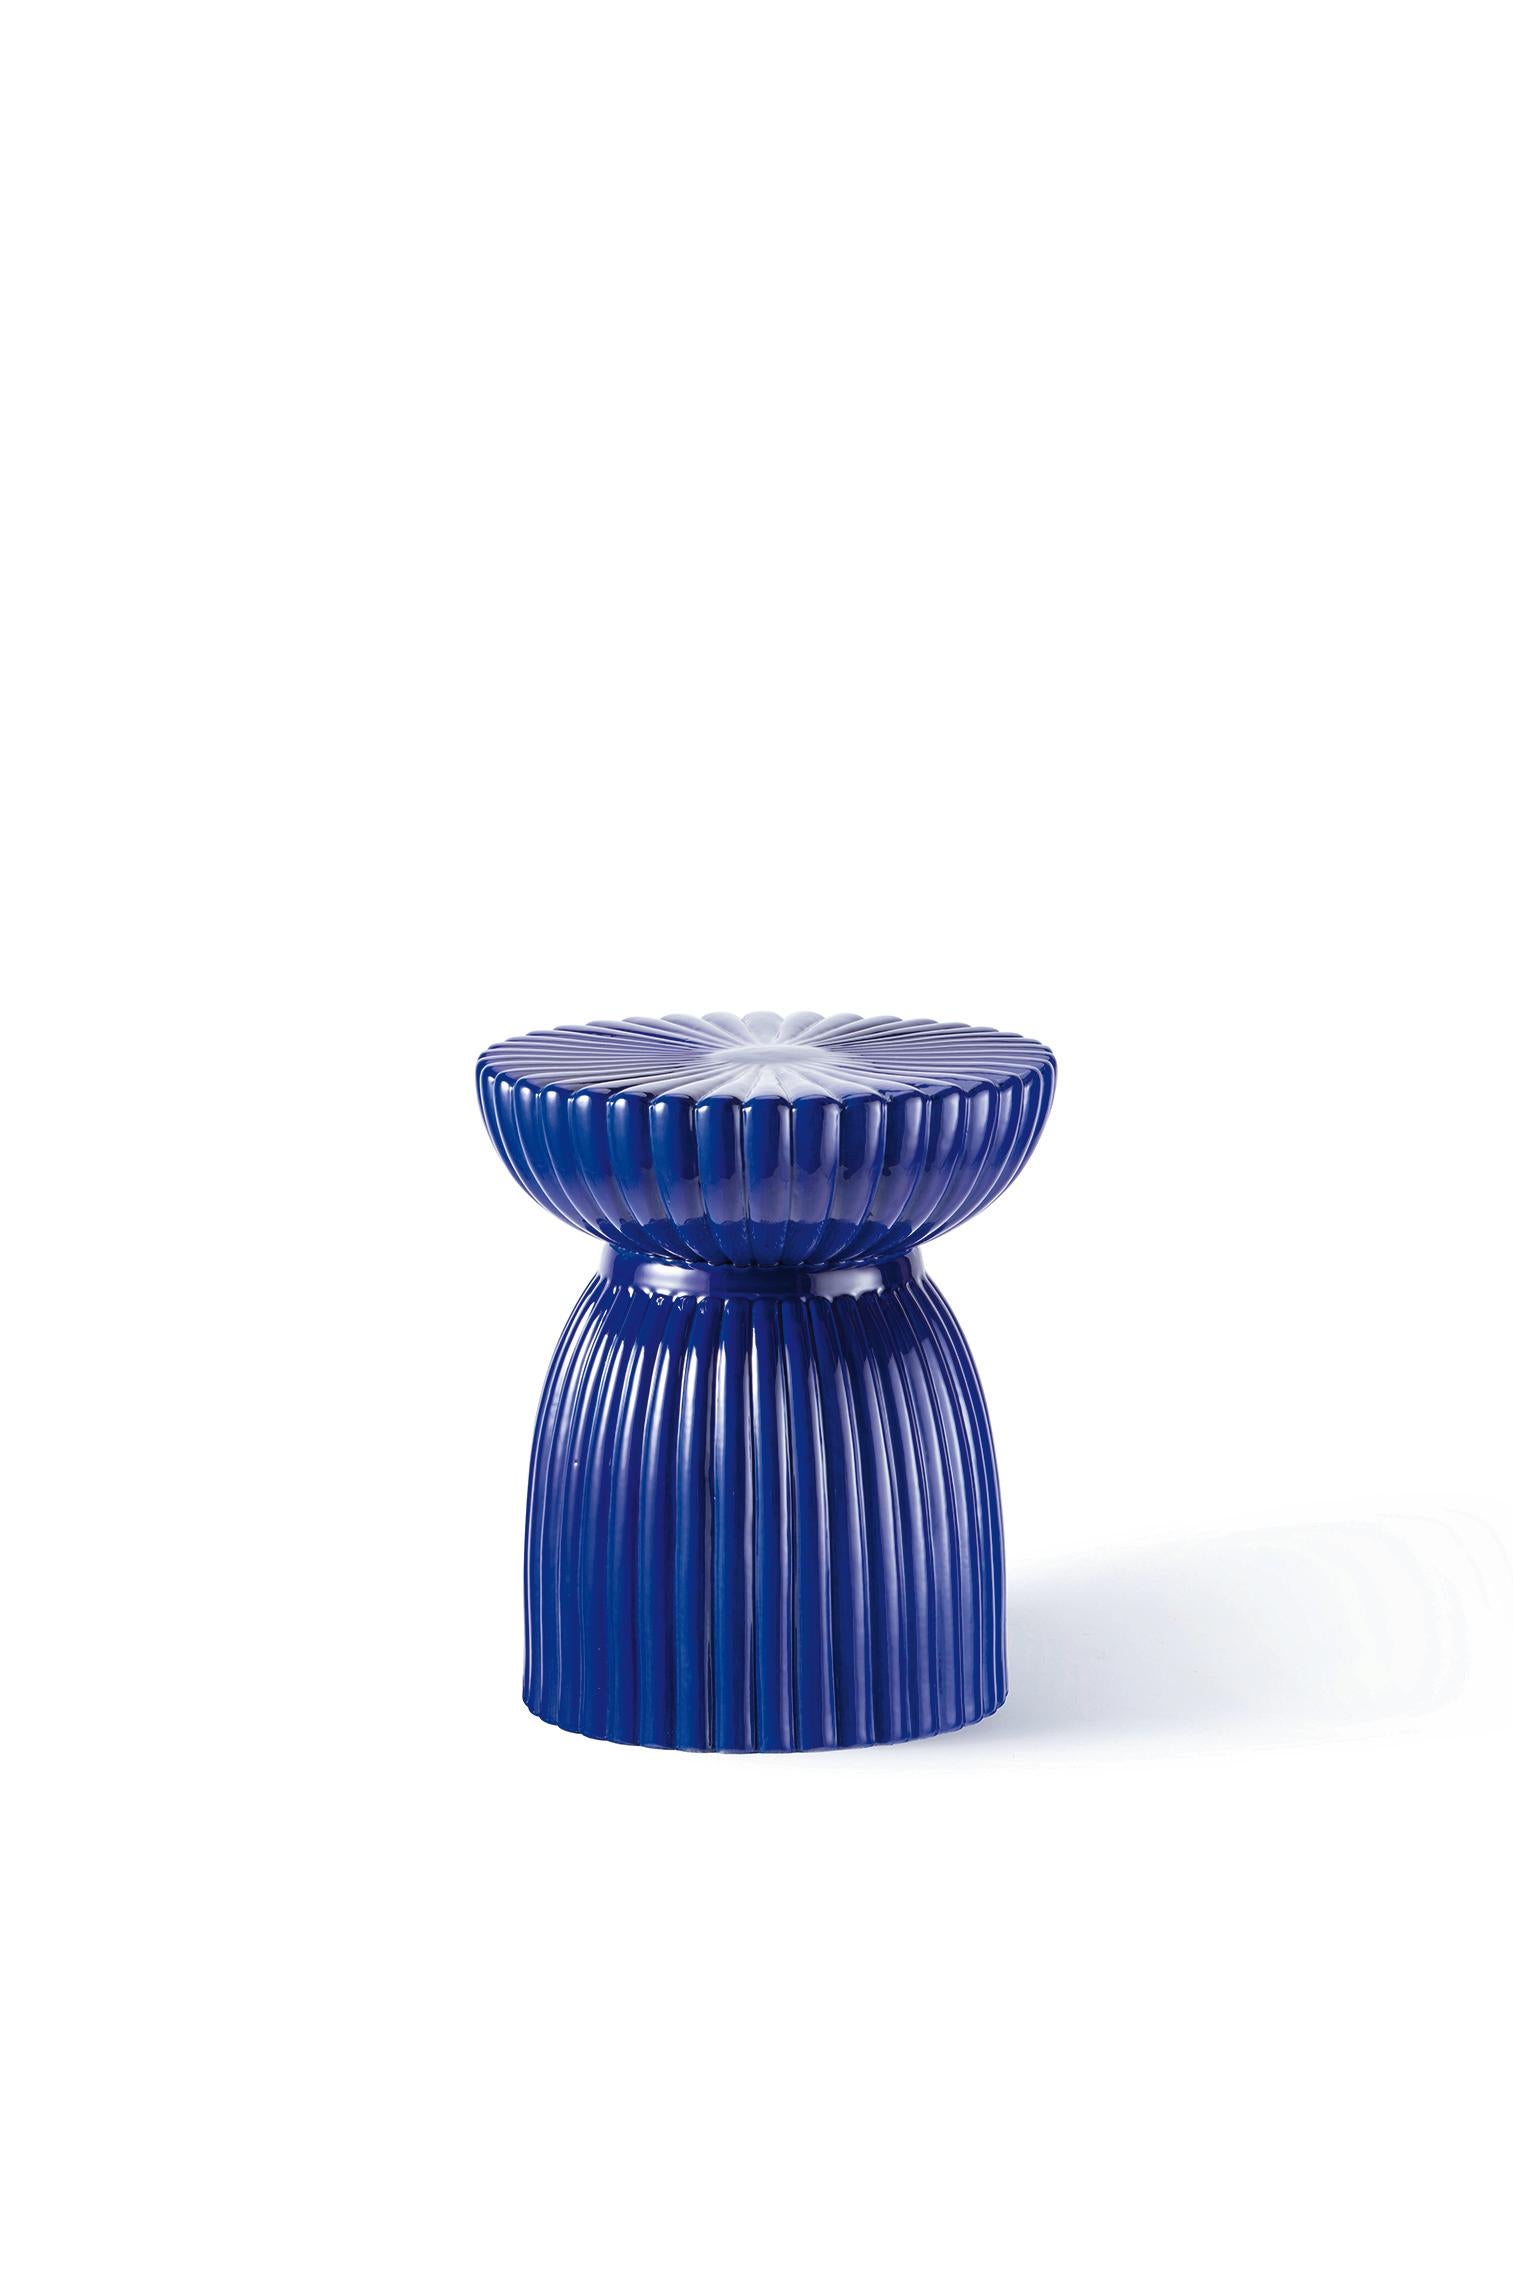 Modern Glossy Ceramic Stool/Gueridon Designed by Thomas Dariel